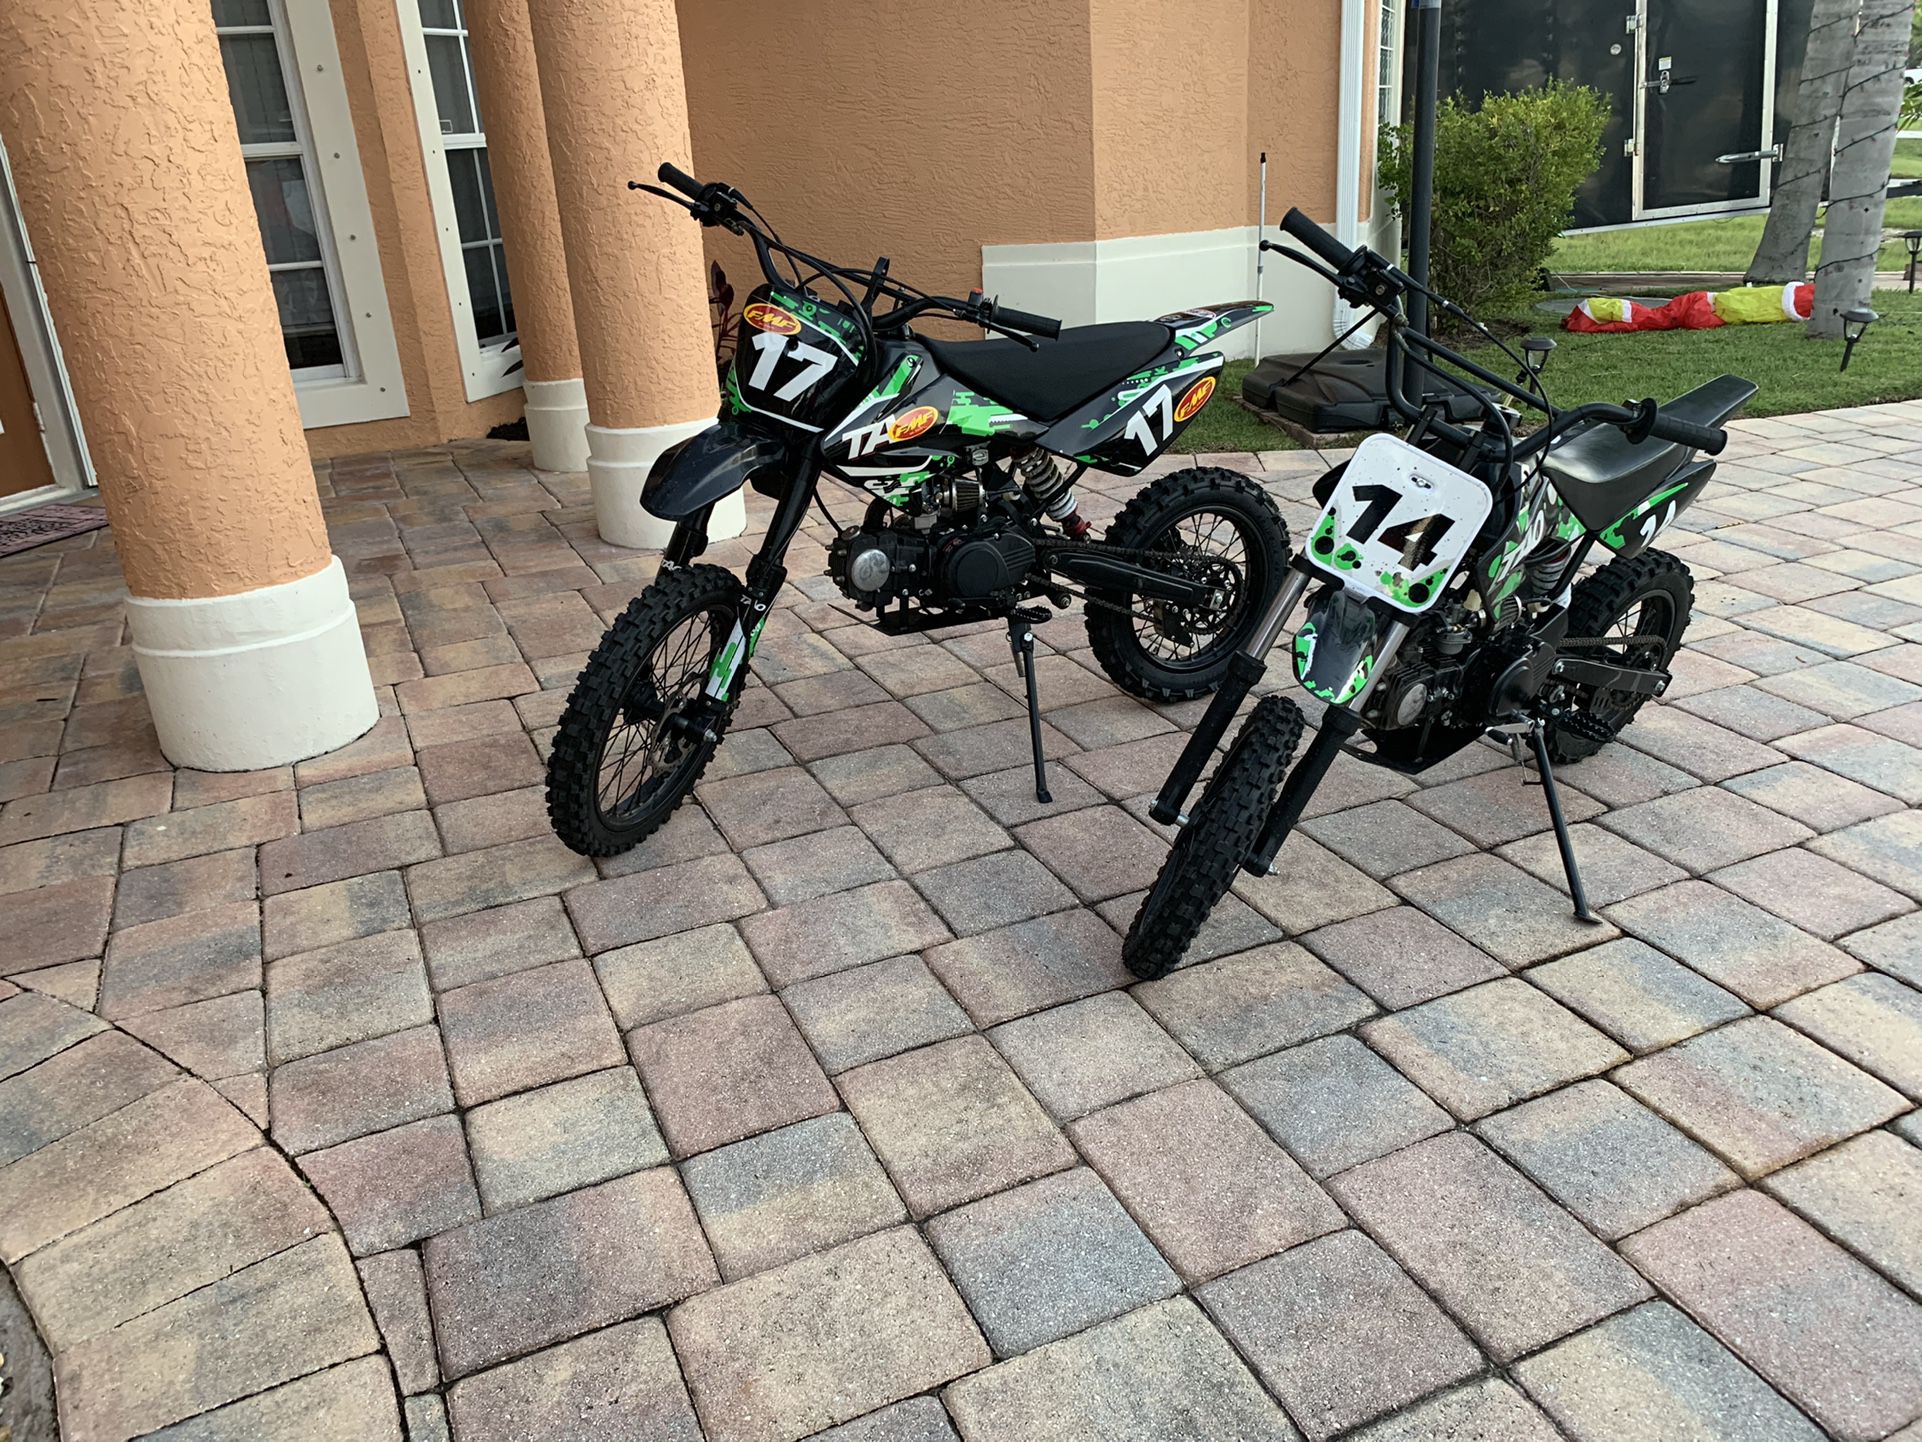 2019 Tao 125cc and 110cc